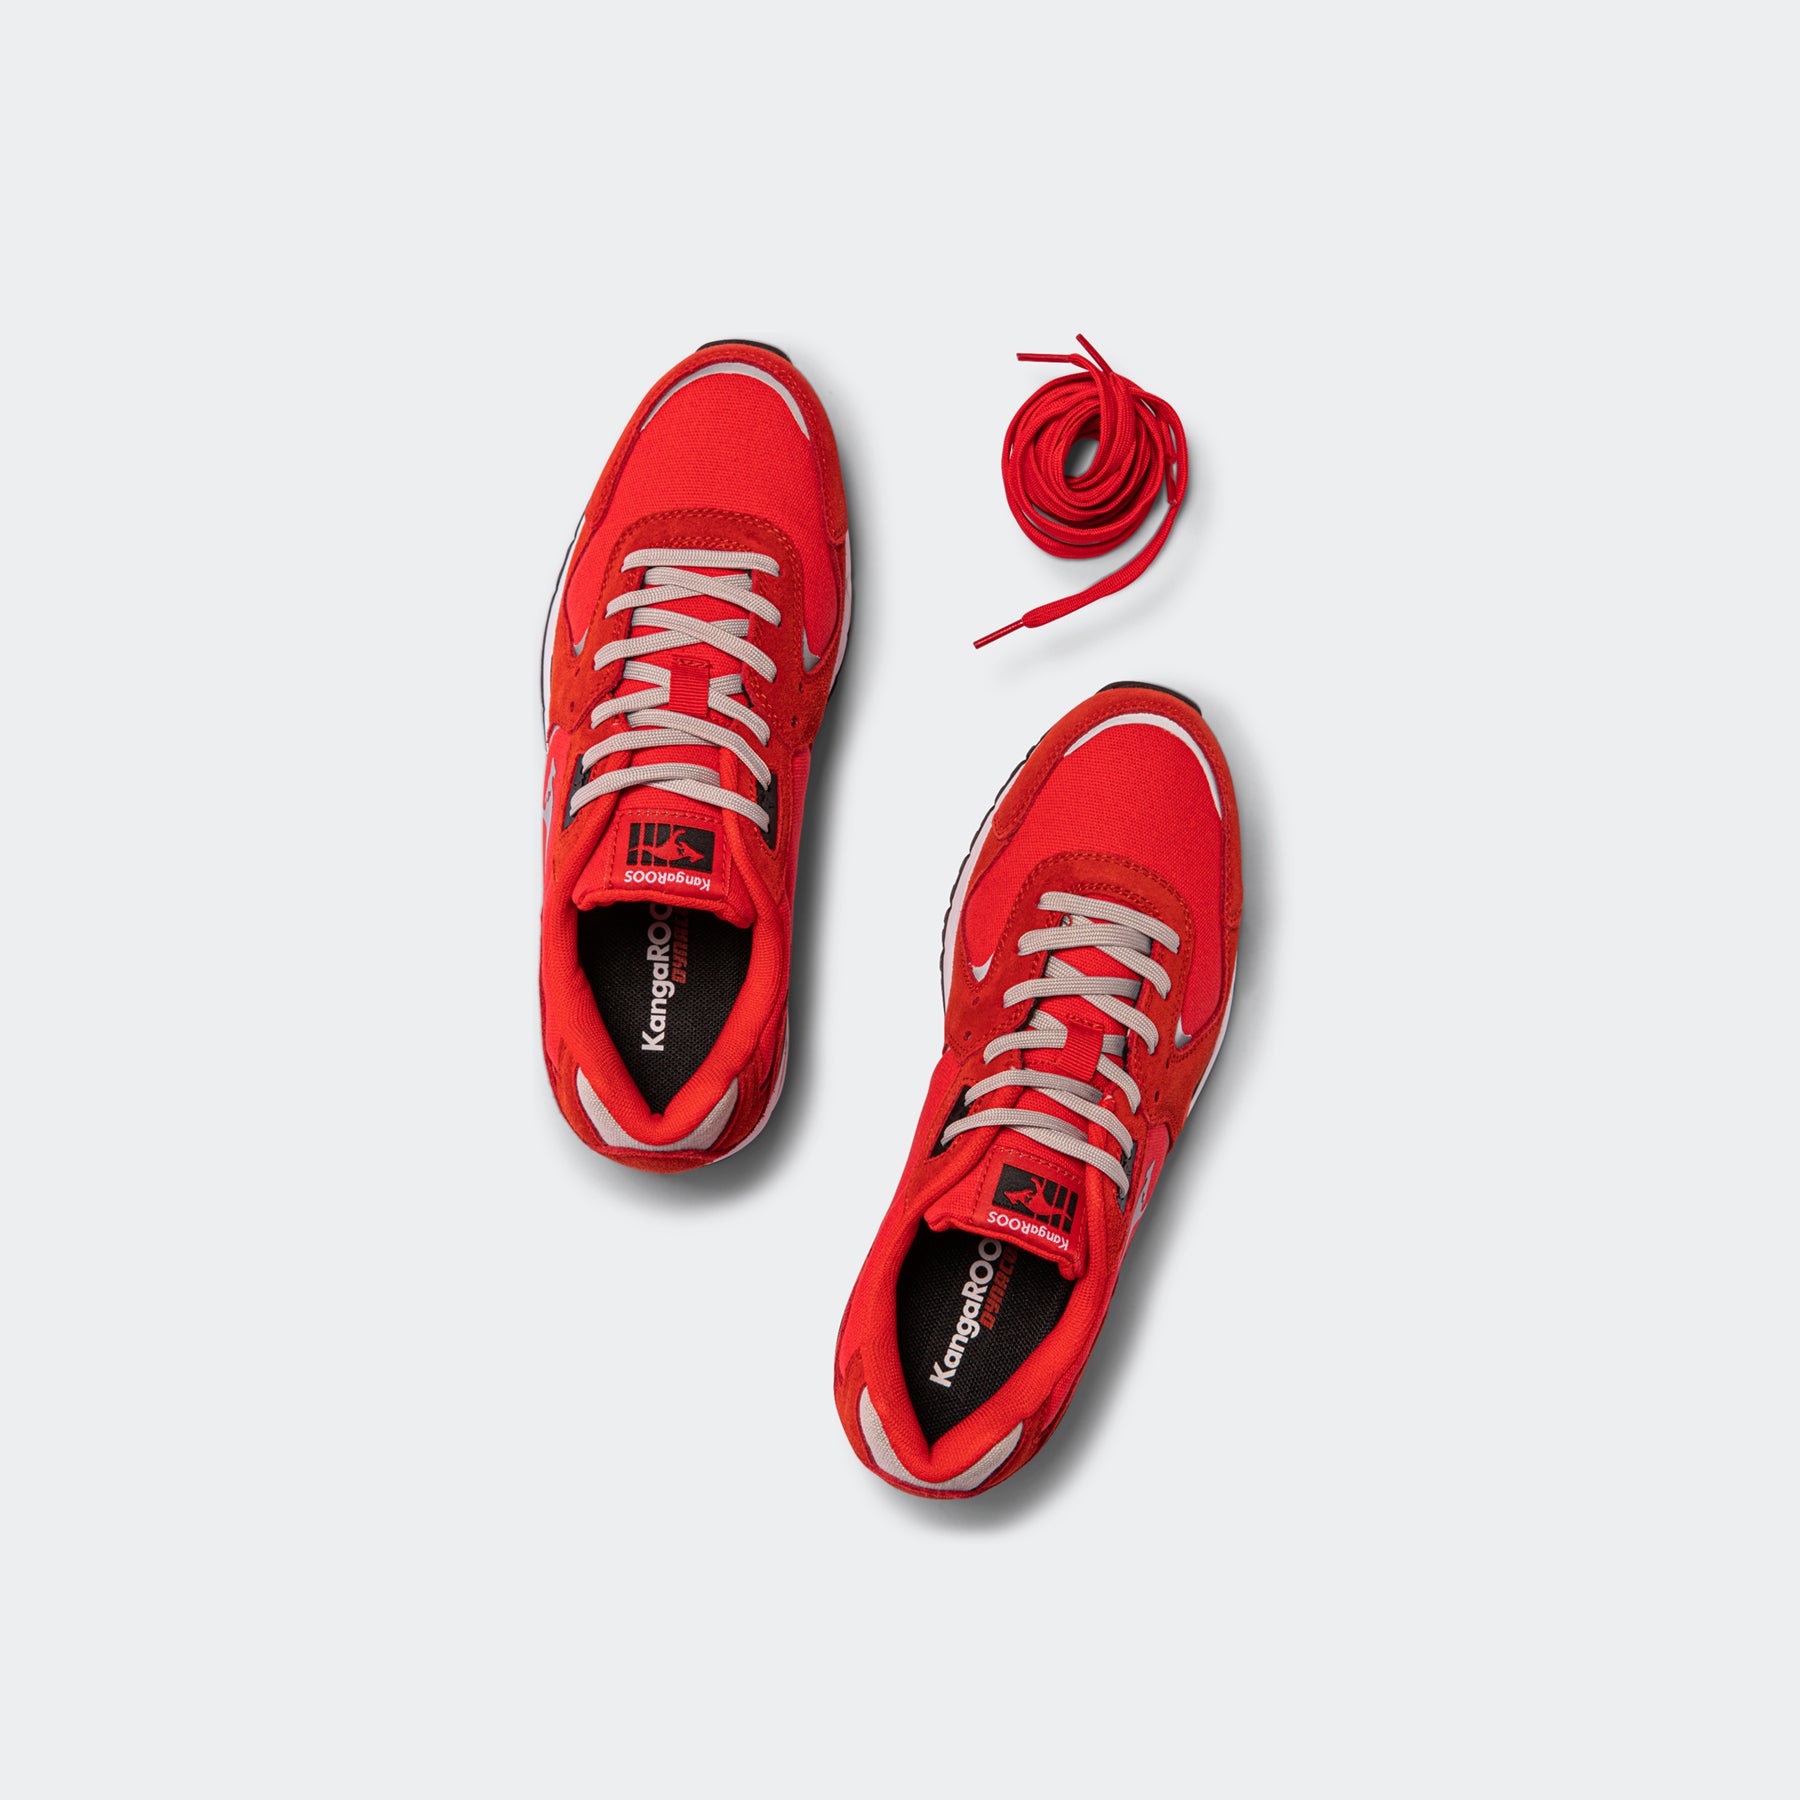 47248_6000_KangaROOS RED - Coil R2 Ultimate, oDamen/ Frauen Sneaker, Trend Sneaker, hoher Laufkomfort, hochwertige Verarbeitung, premium Qualität, elegant, Freizeit Schuh, KangaROOS, Hummel & Hummel, Herren, Männer Sneakers